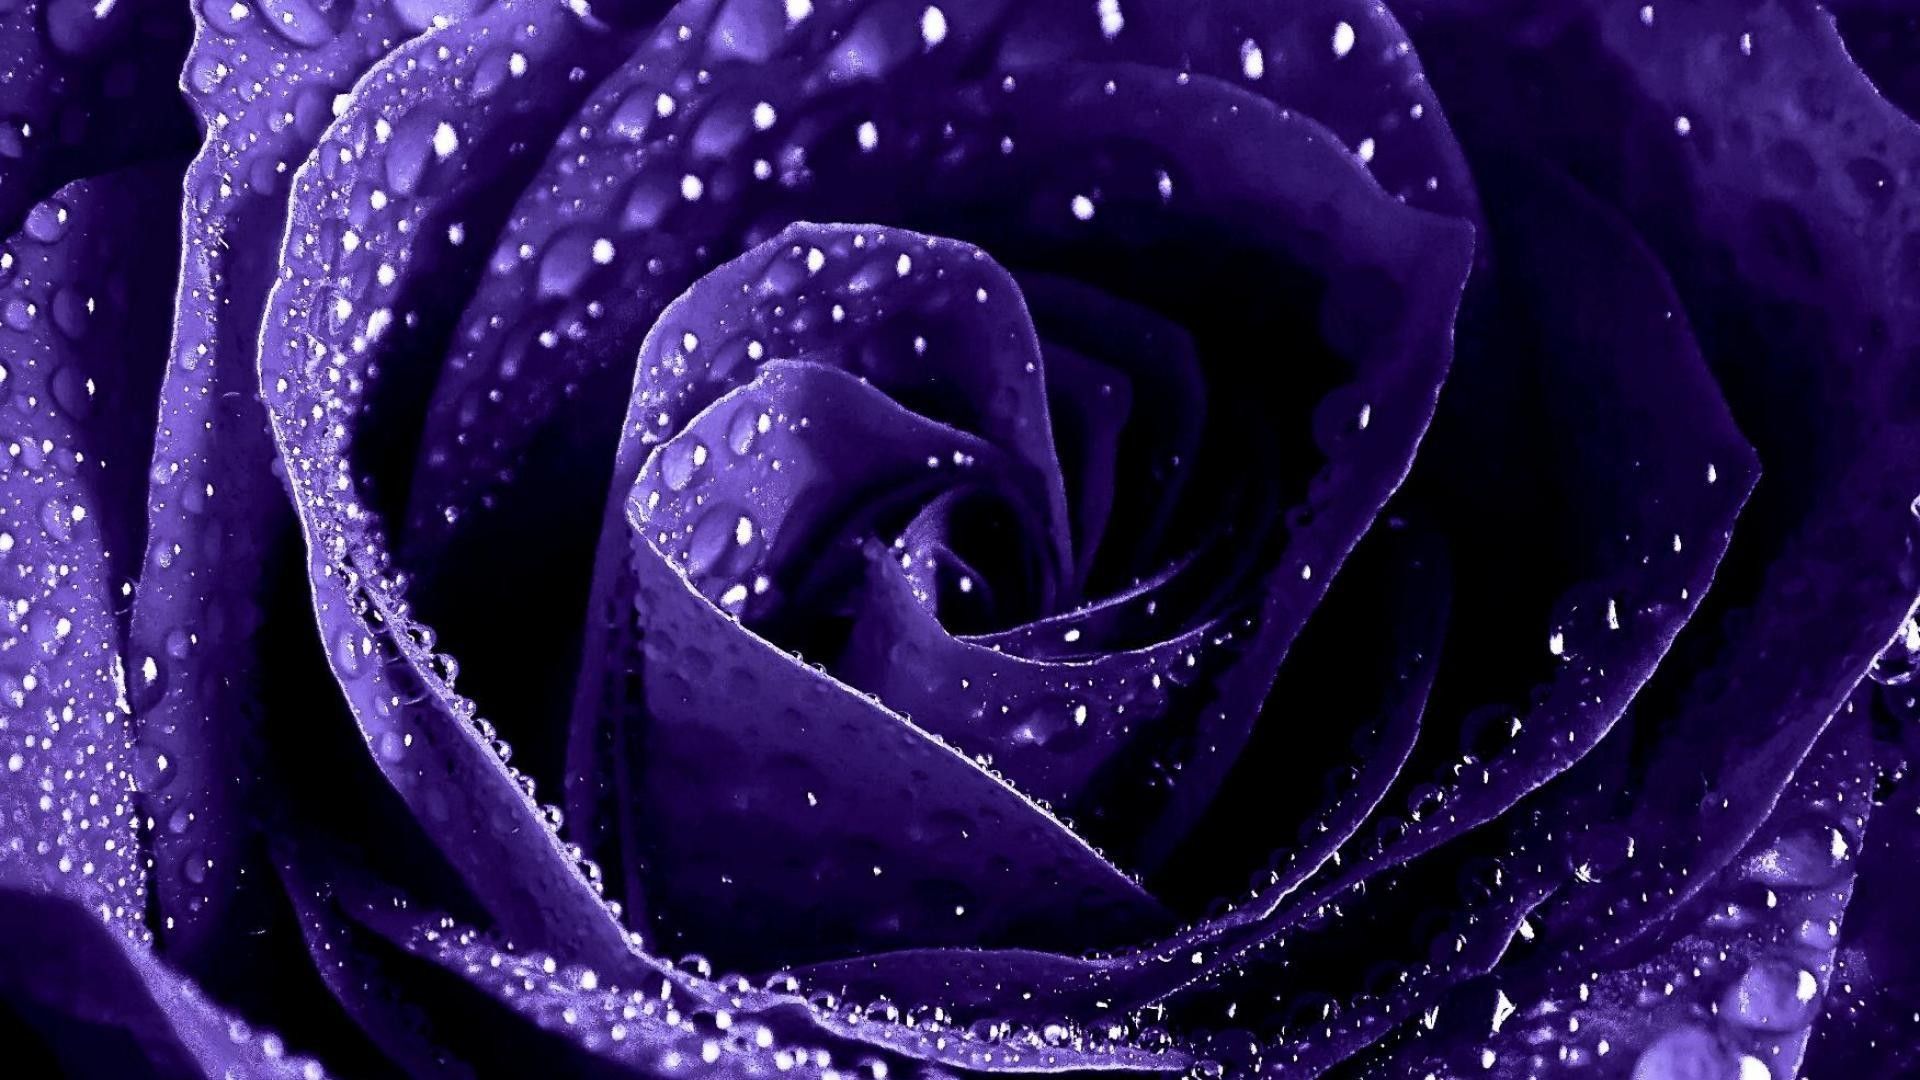 purple rose wallpapers